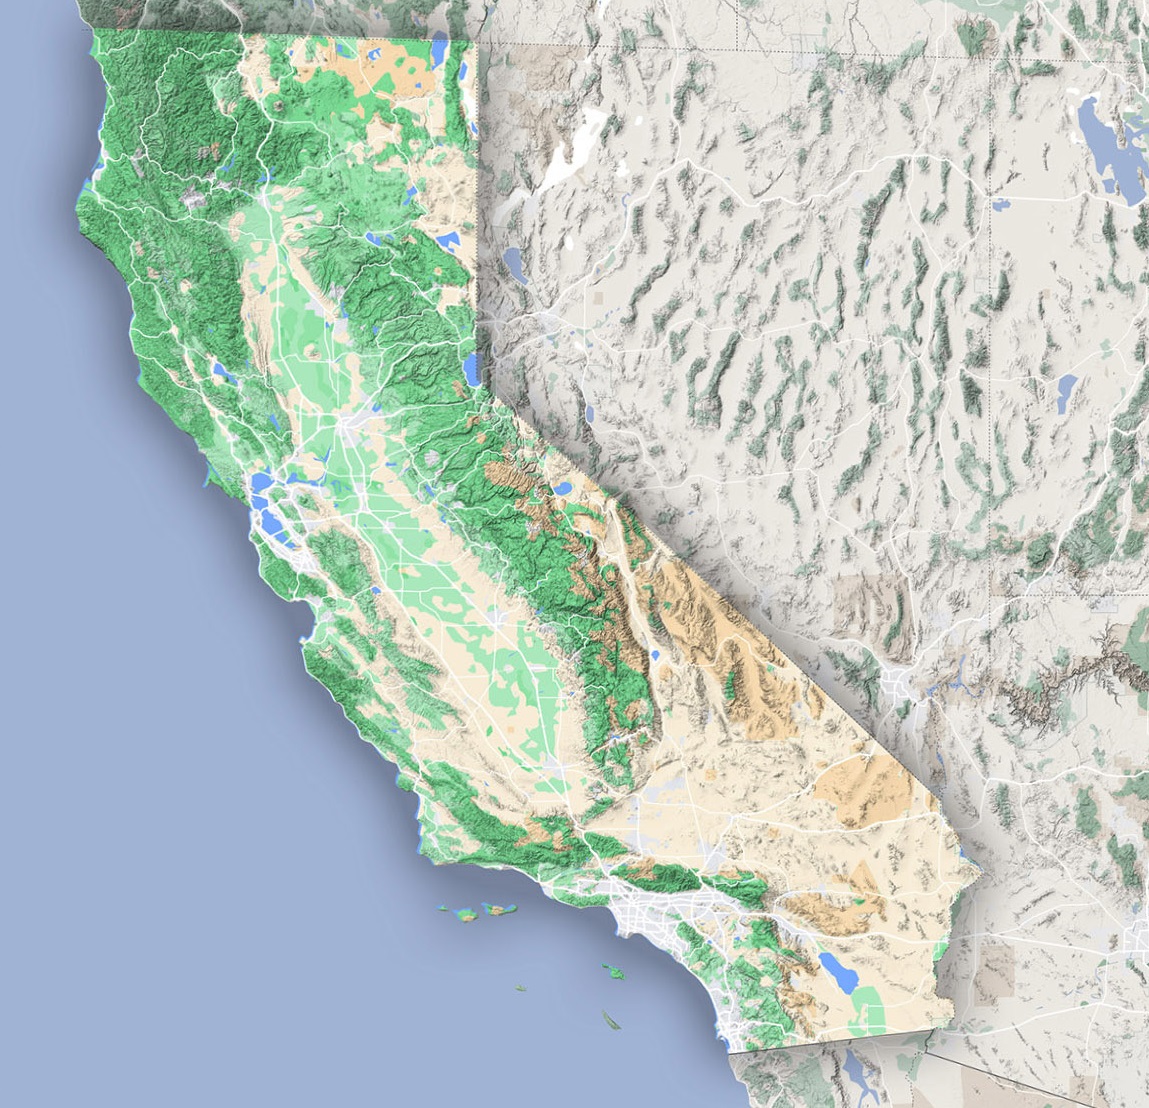 Terrain Map of California